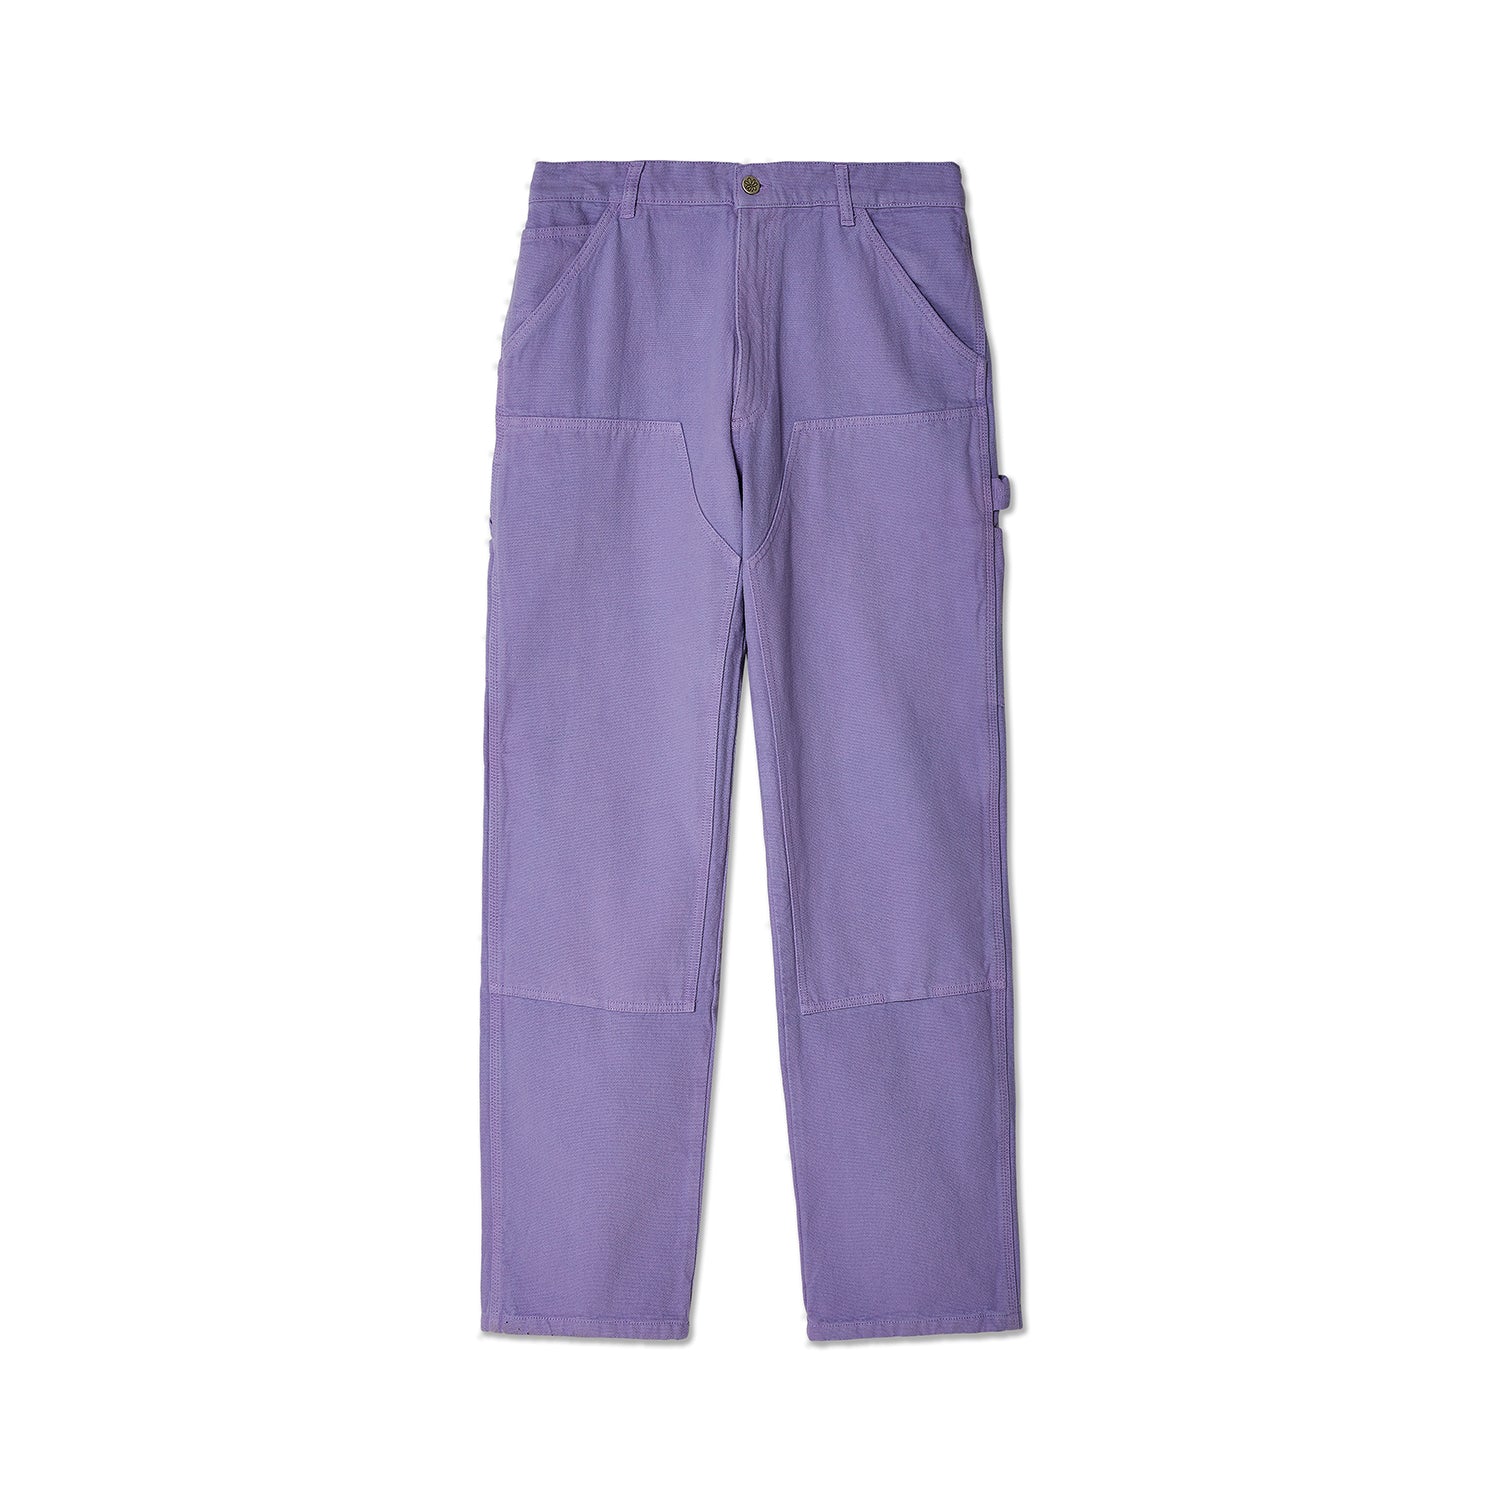 Sky High Farm Workwear Double Knee Pants Lilac Purple Front